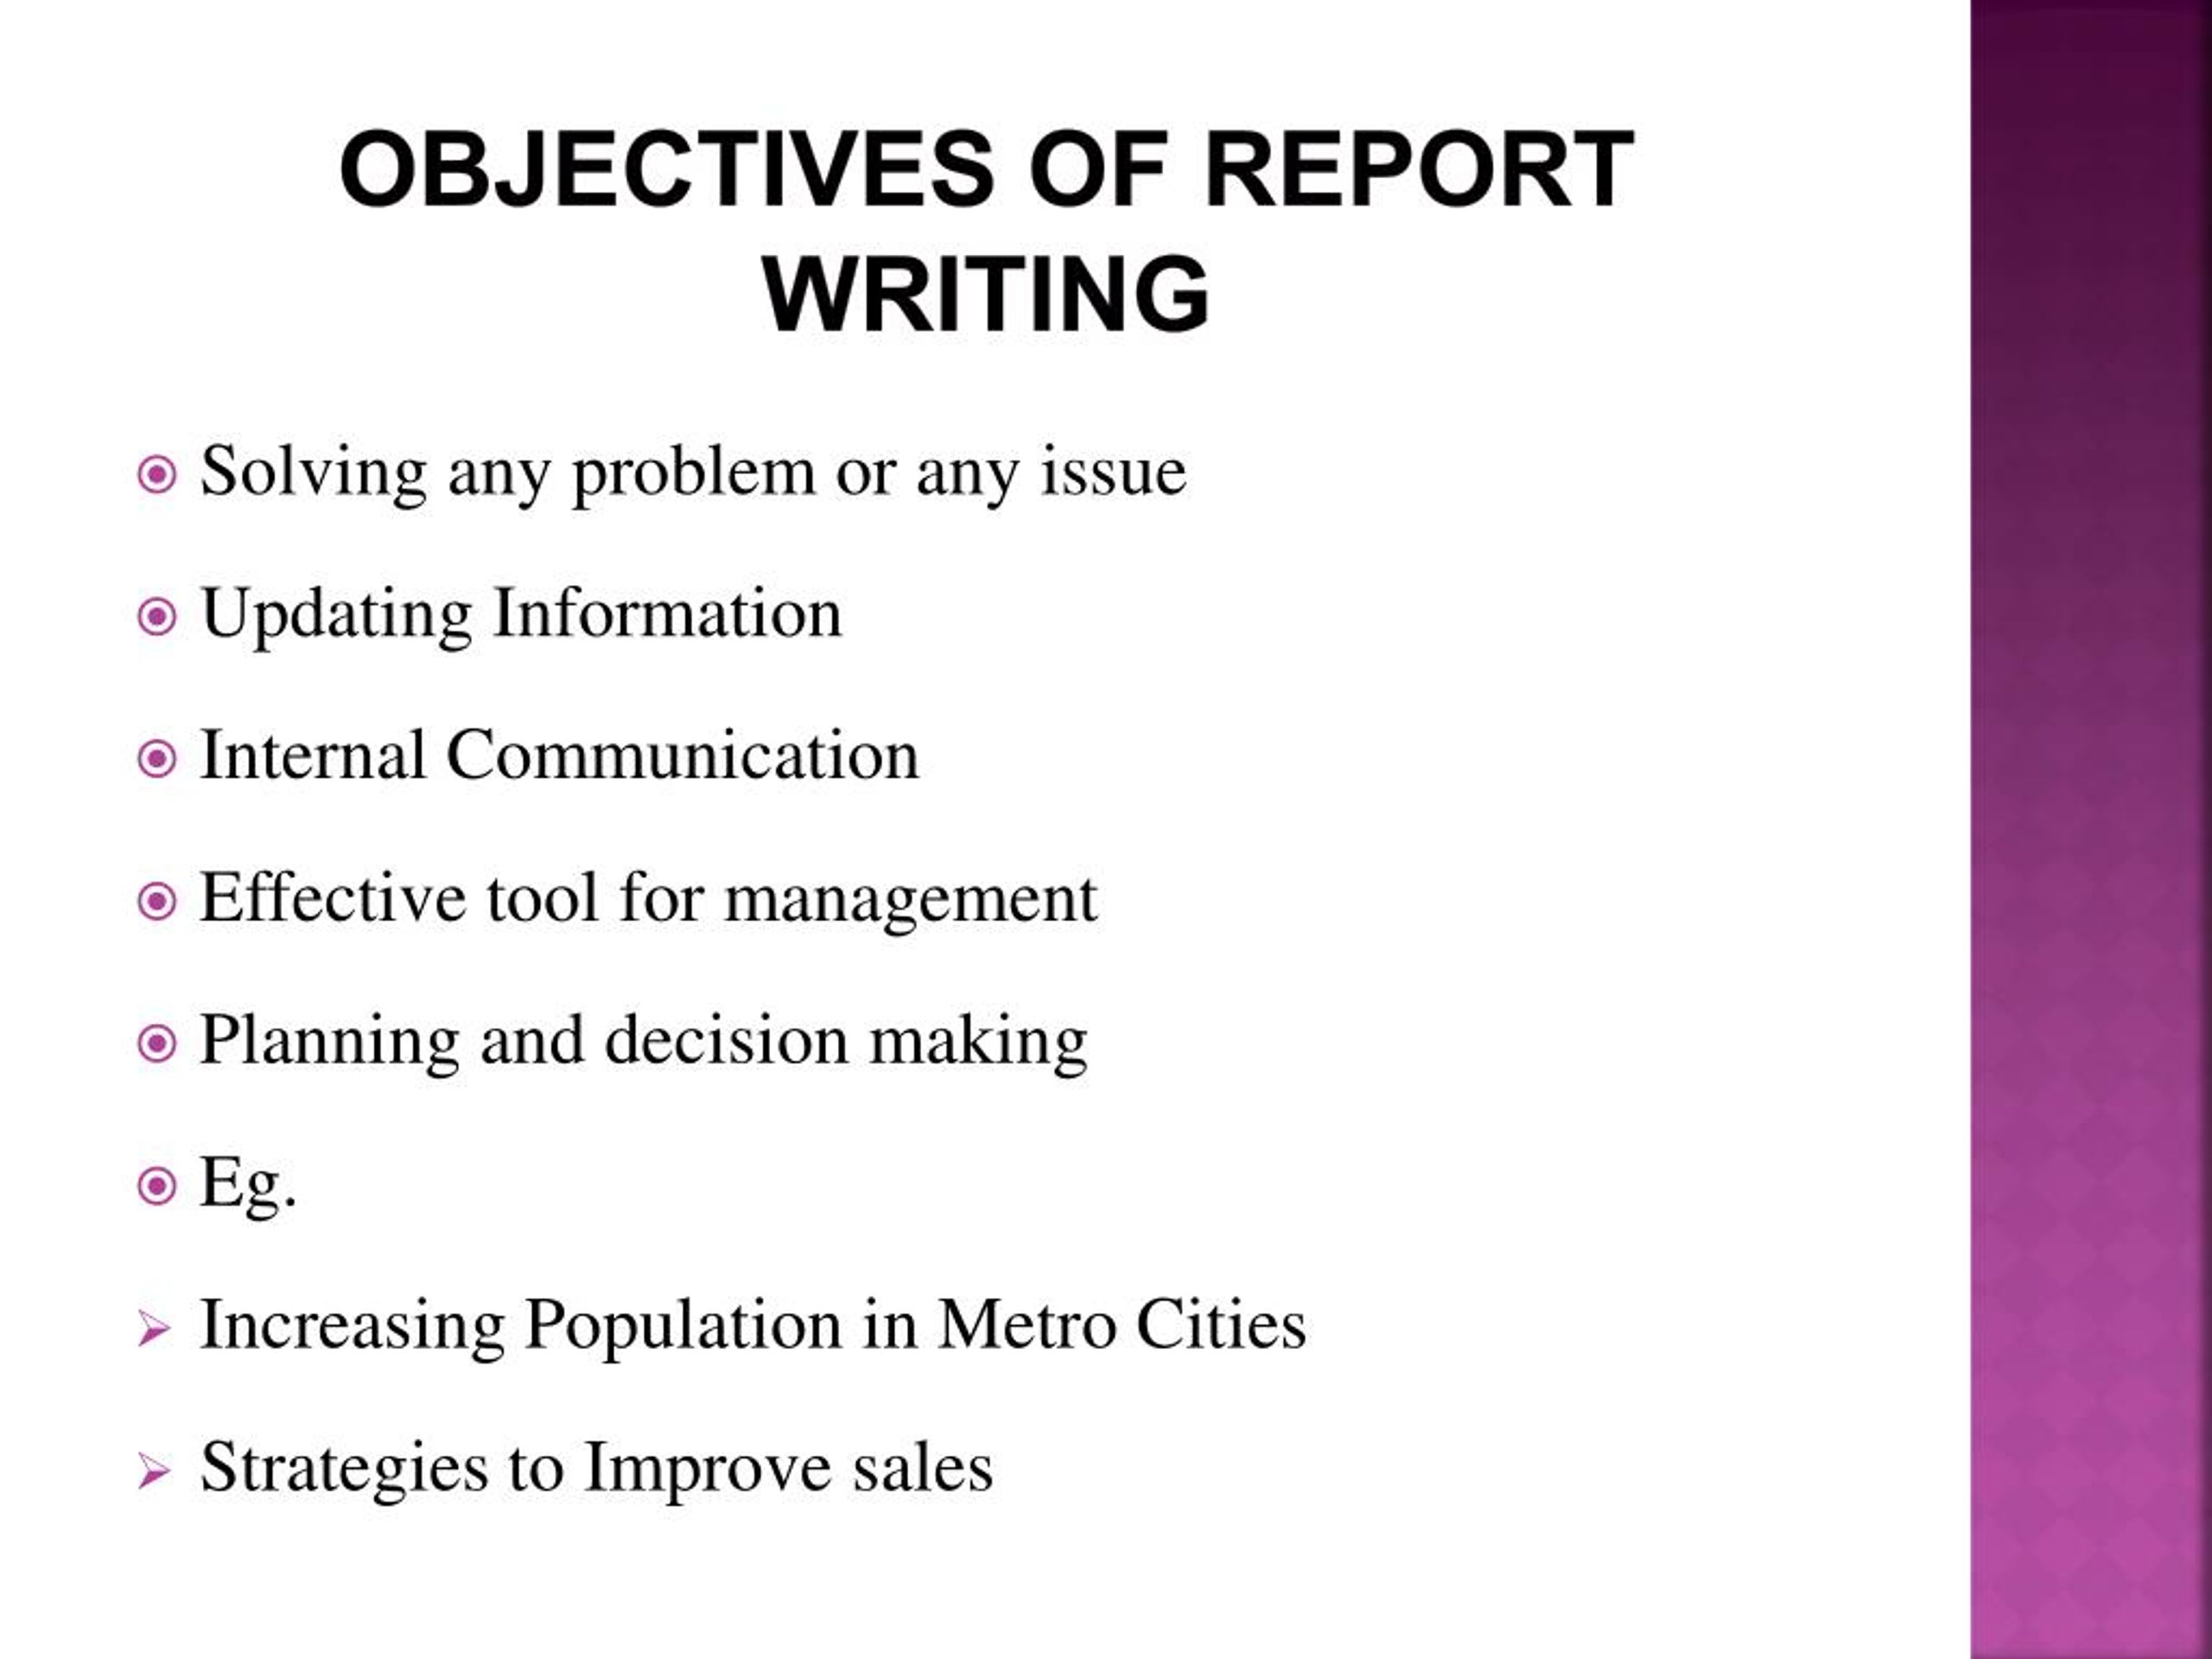 report writing presentation ppt